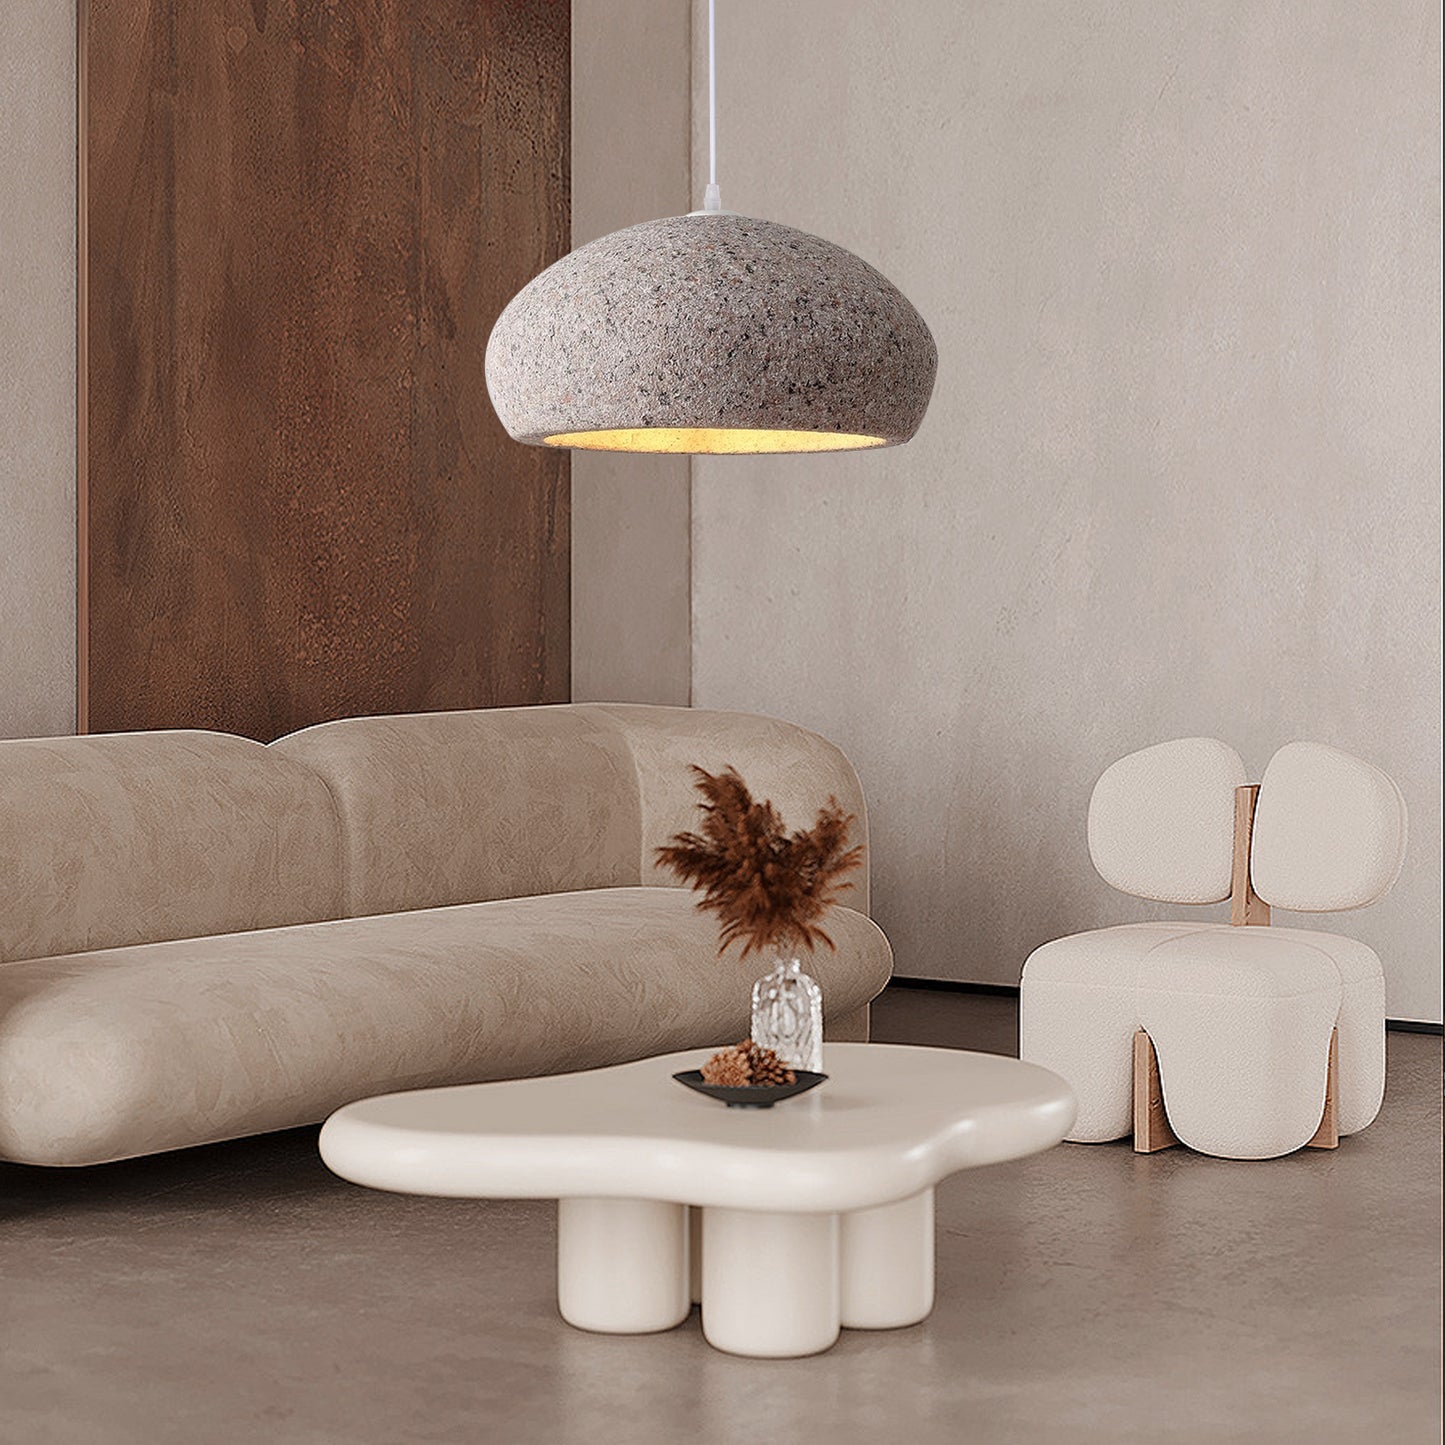 Japanese Fashion Handmade Pendant Lighting Living Room Decorative Flat Oval Lighting